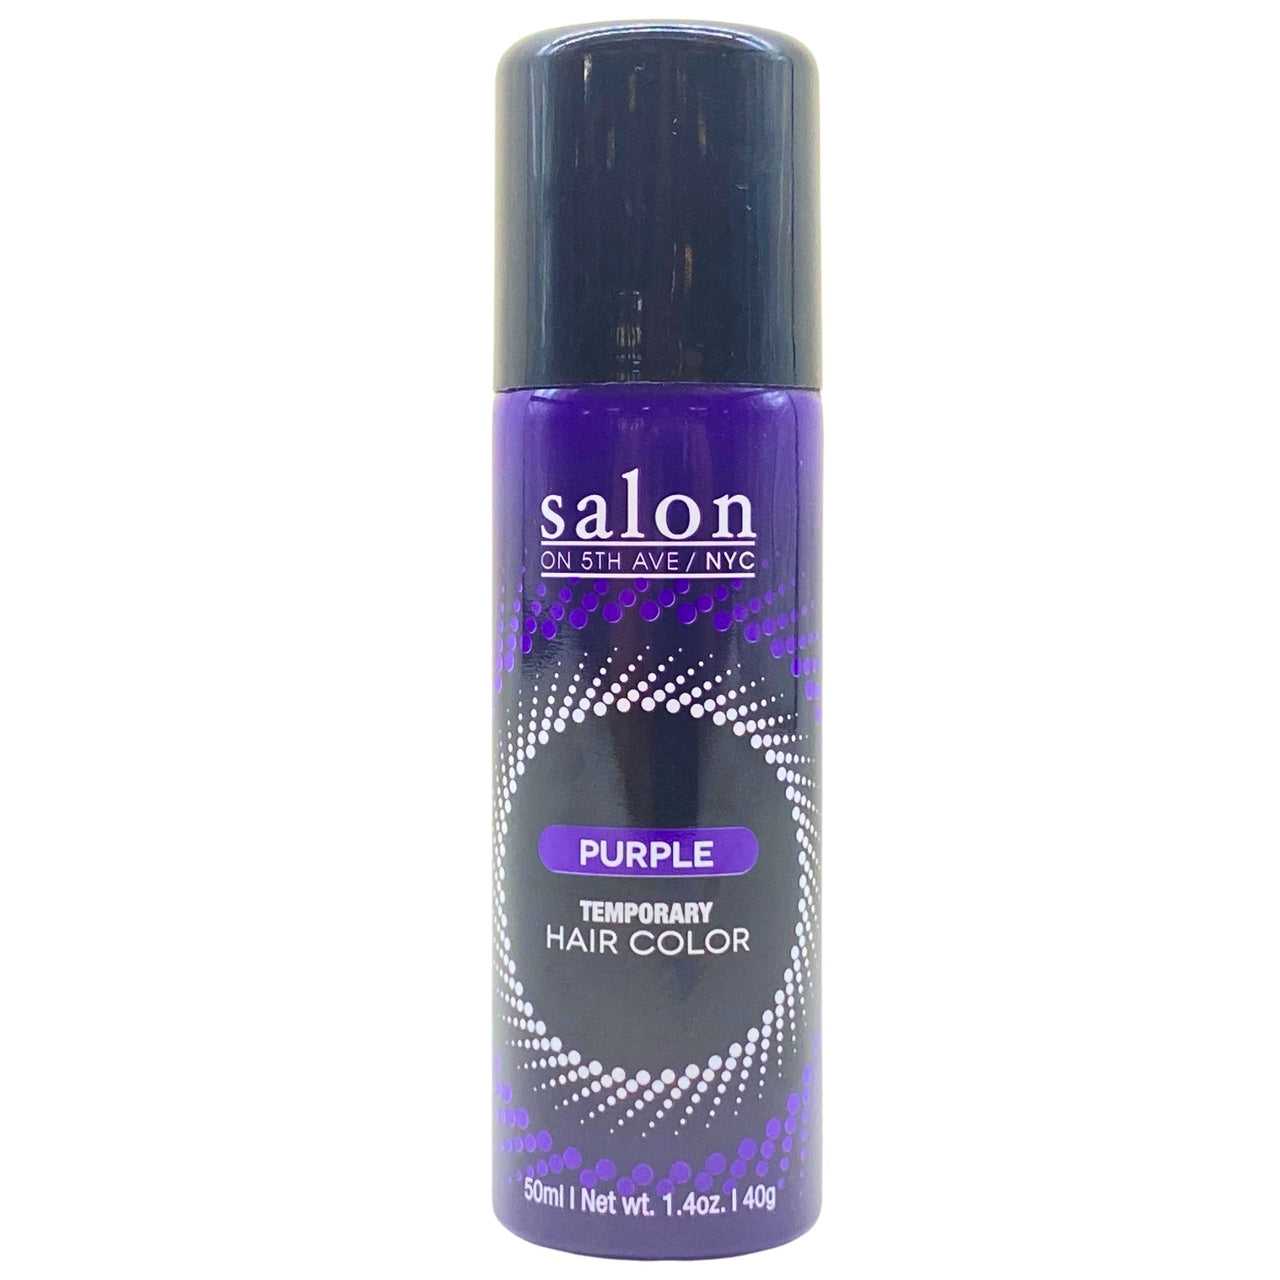 Salon On 5TH AVE/NYC Purple Temporary Hair Color 